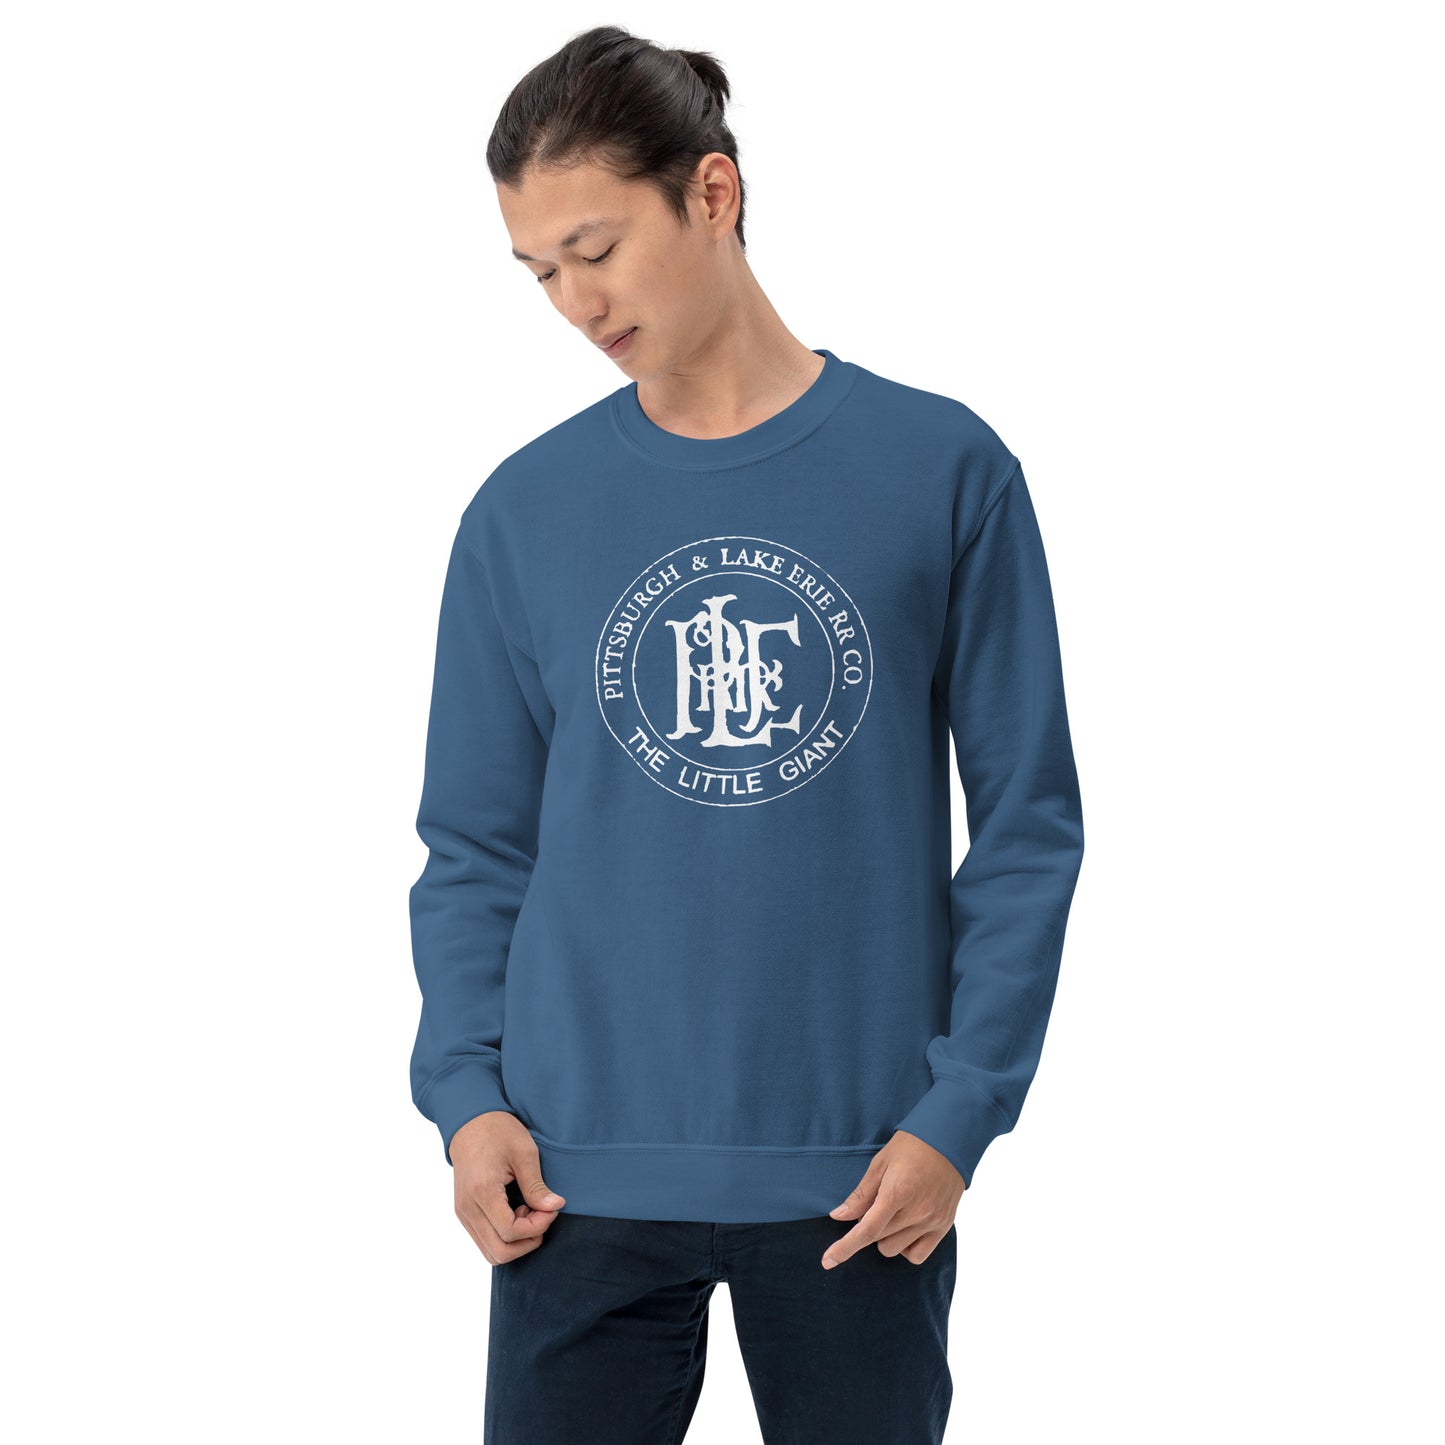 Pittsburgh & Lake Erie Railroad- Unisex Sweatshirt